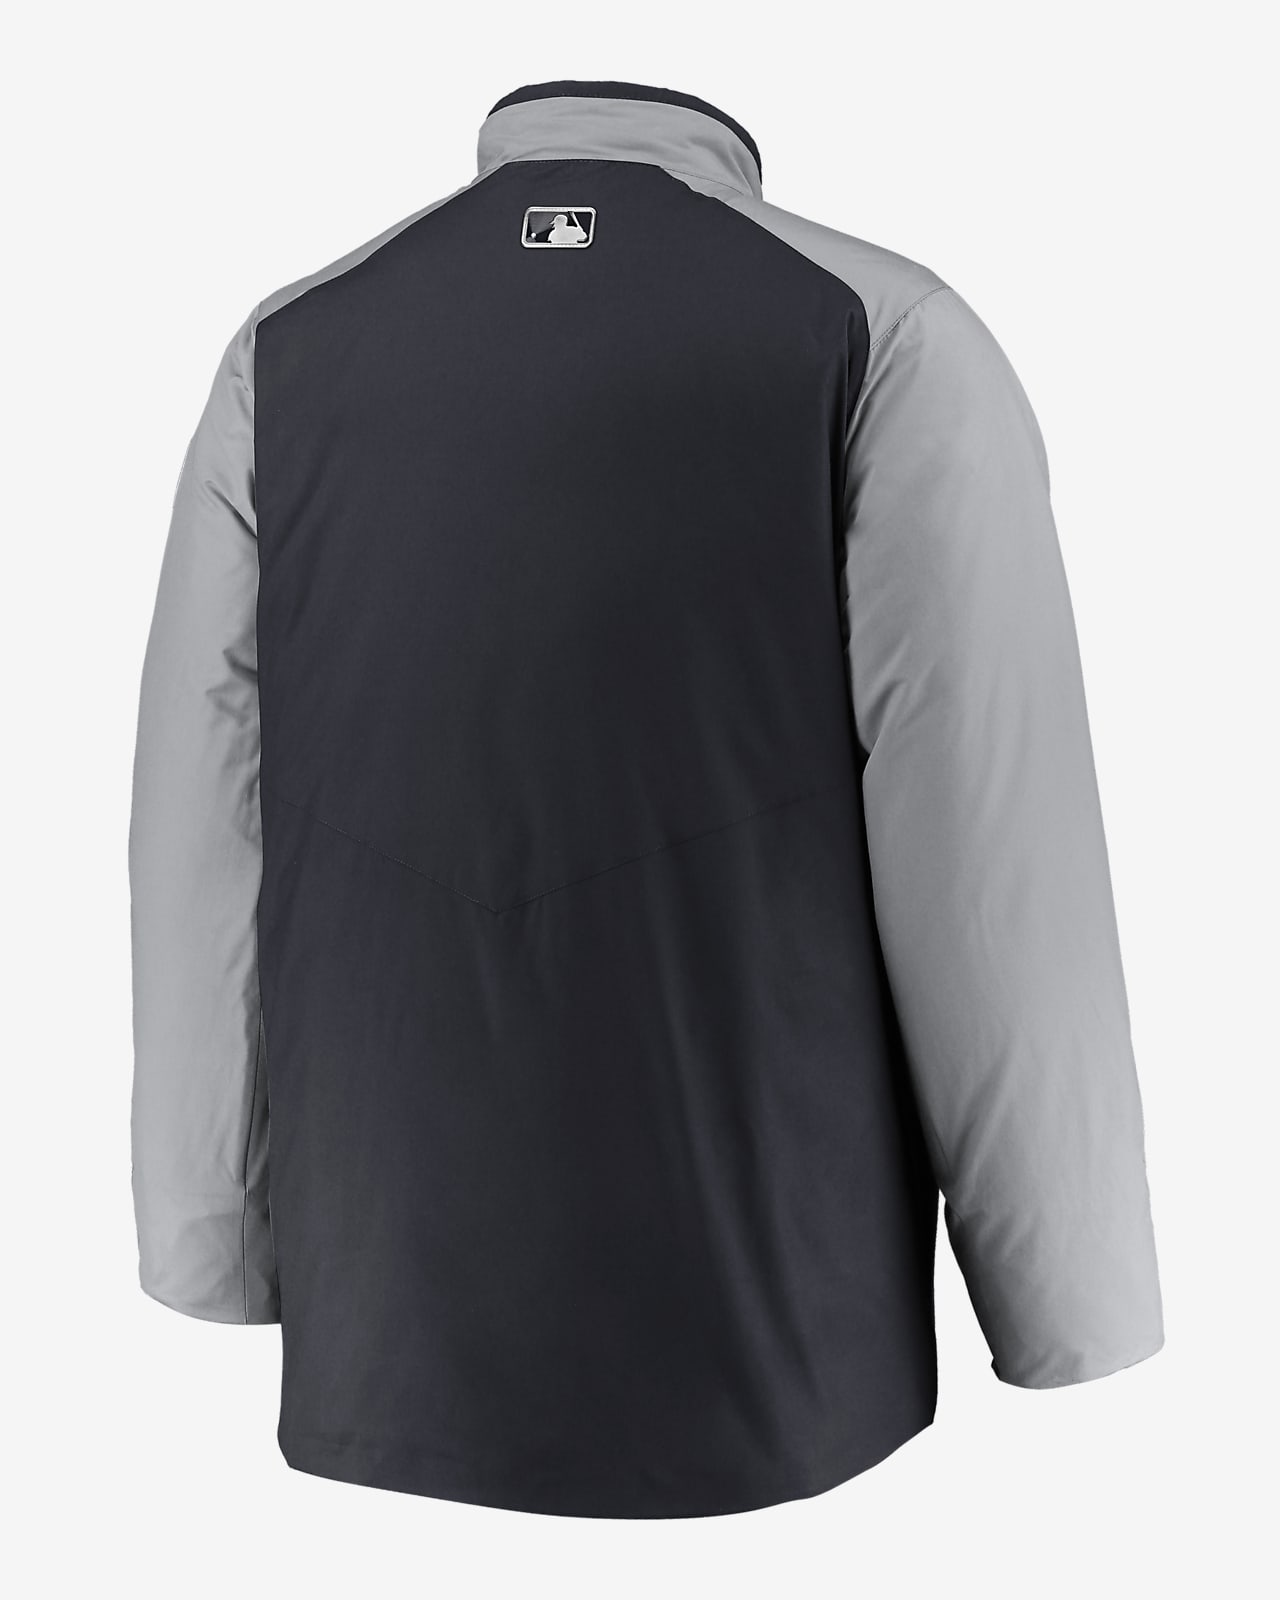 Nike Dugout (MLB St. Louis Cardinals) Men's Full-Zip Jacket